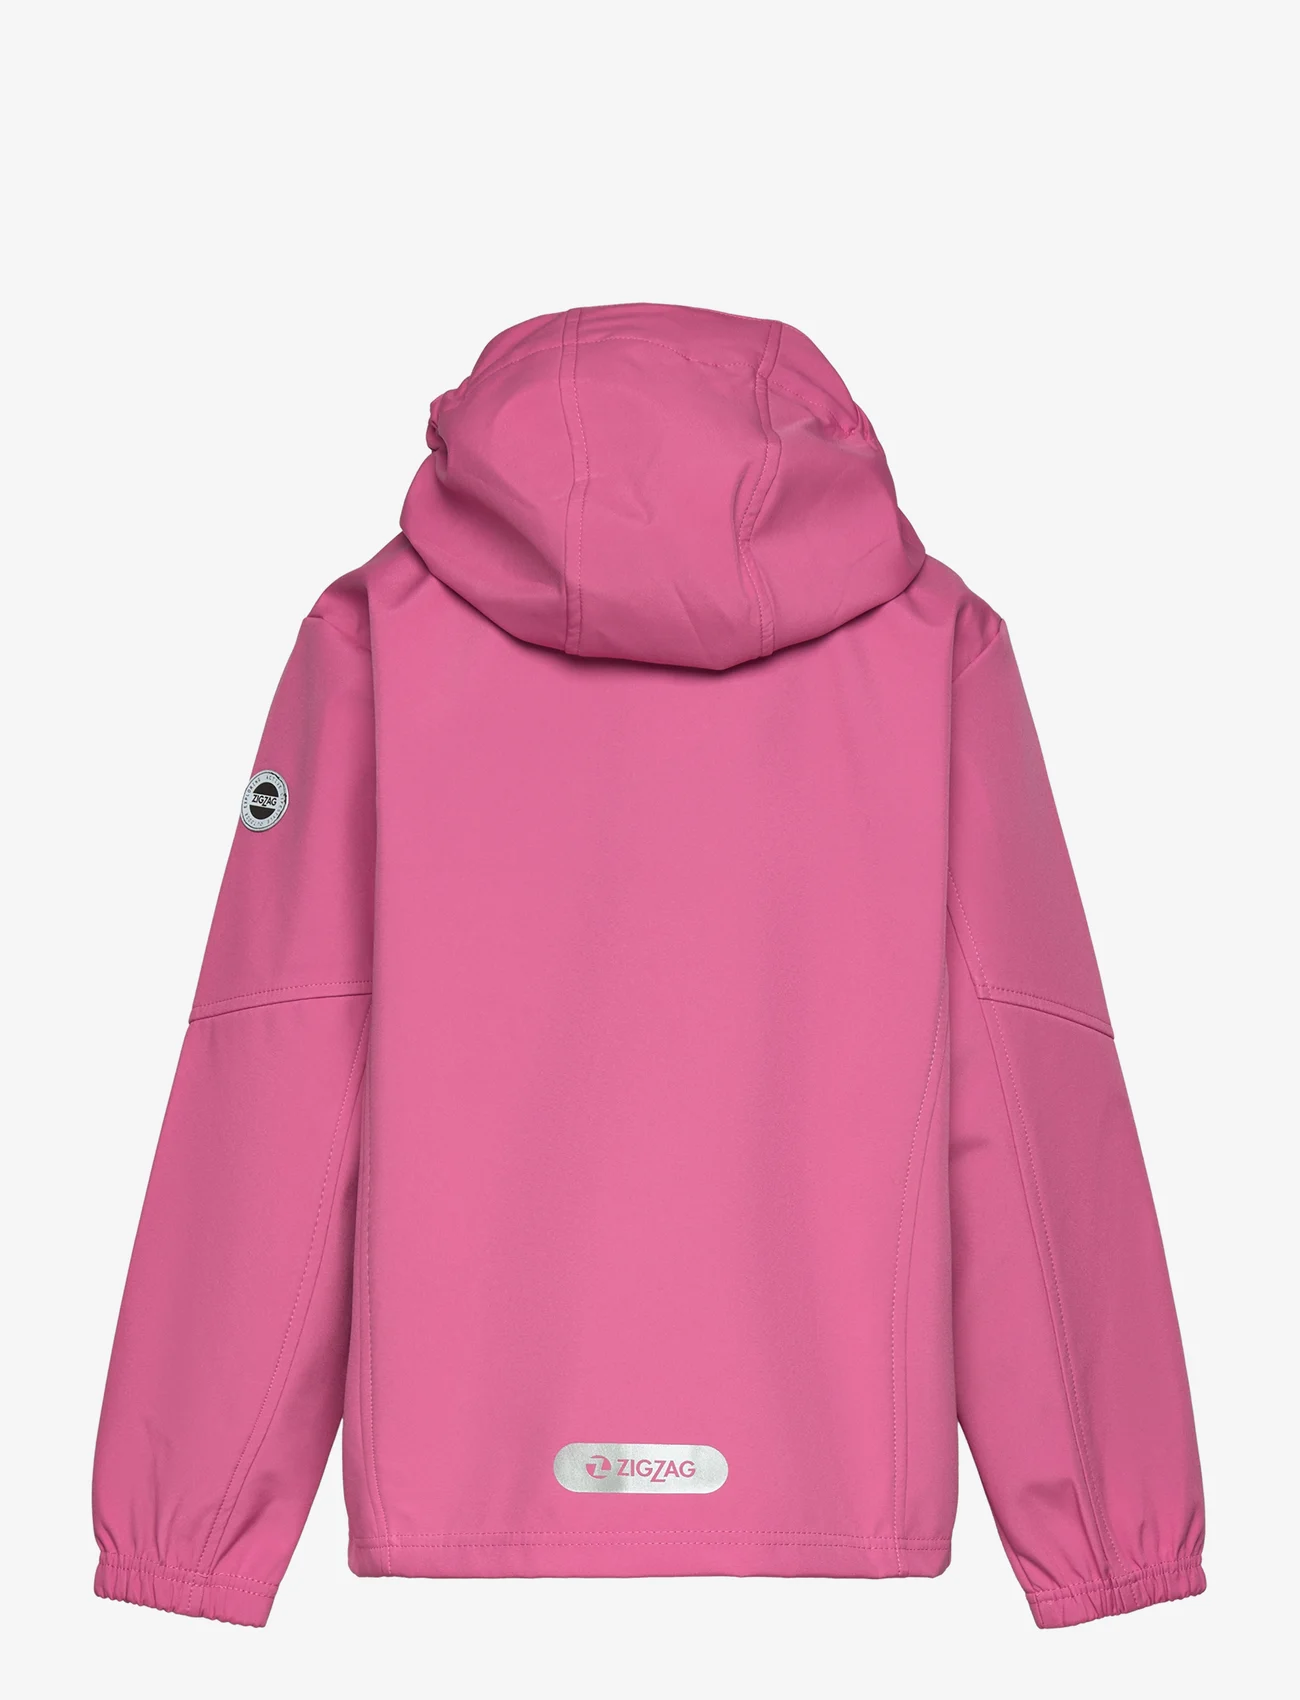 ZigZag - Troy Softshell Jacket W-PRO 8000 - kids - shocking pink - 1